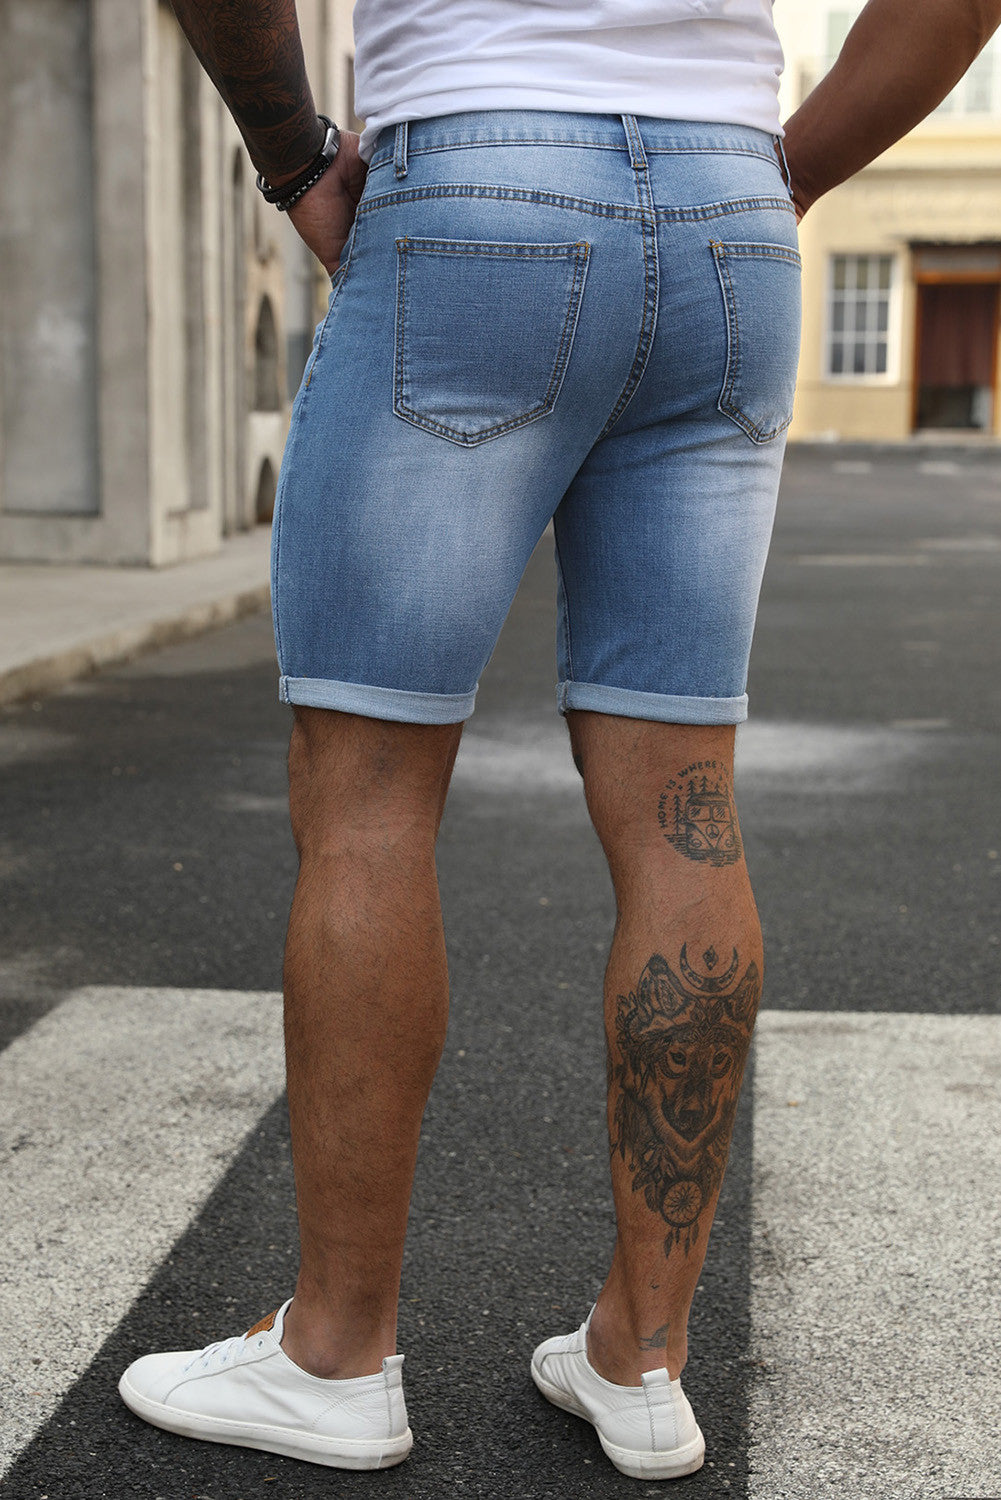 Sky Blue America Flag Sunflower Ripped Denim Shorts Men's Pants JT's Designer Fashion